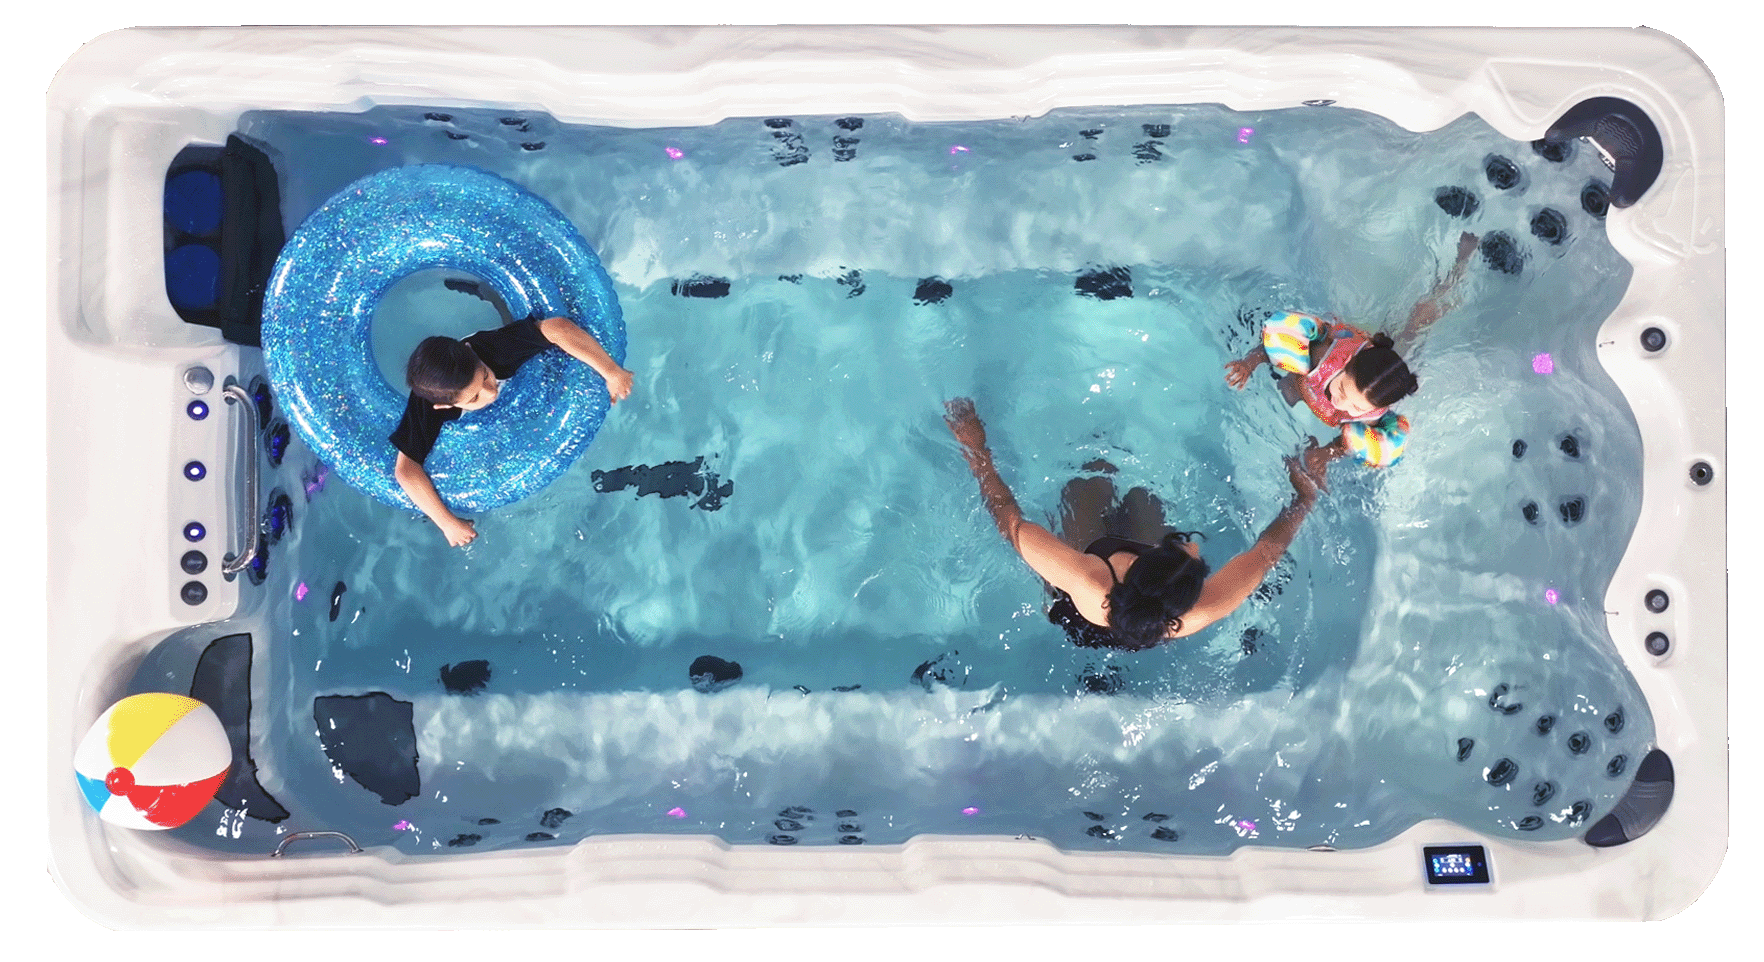 TidalFit EP14 WaVS System: Family enjoying swim spa